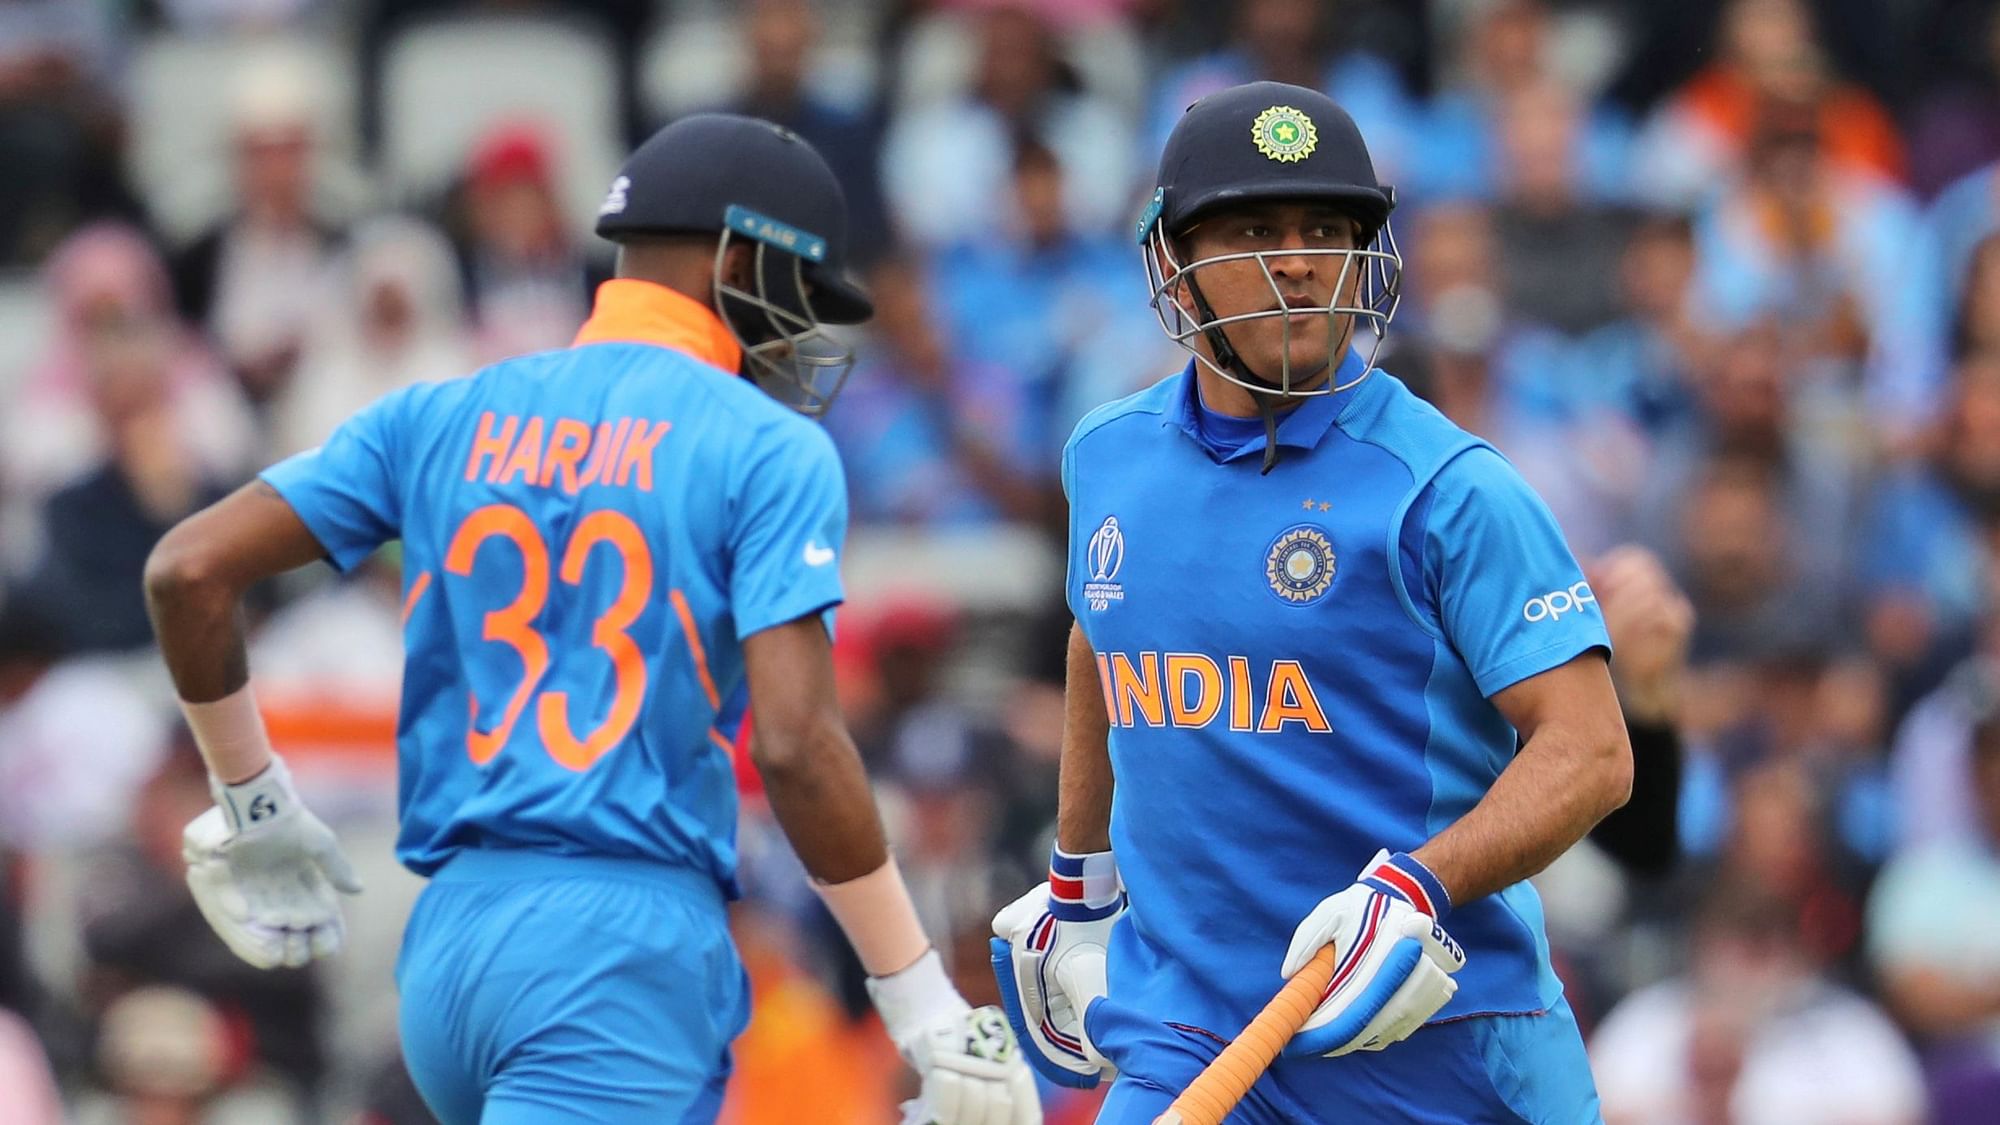 Sanjay Manjrekar commented on why he thought India captain Virat Kohli sent Hardik Pandya before MS Dhoni.